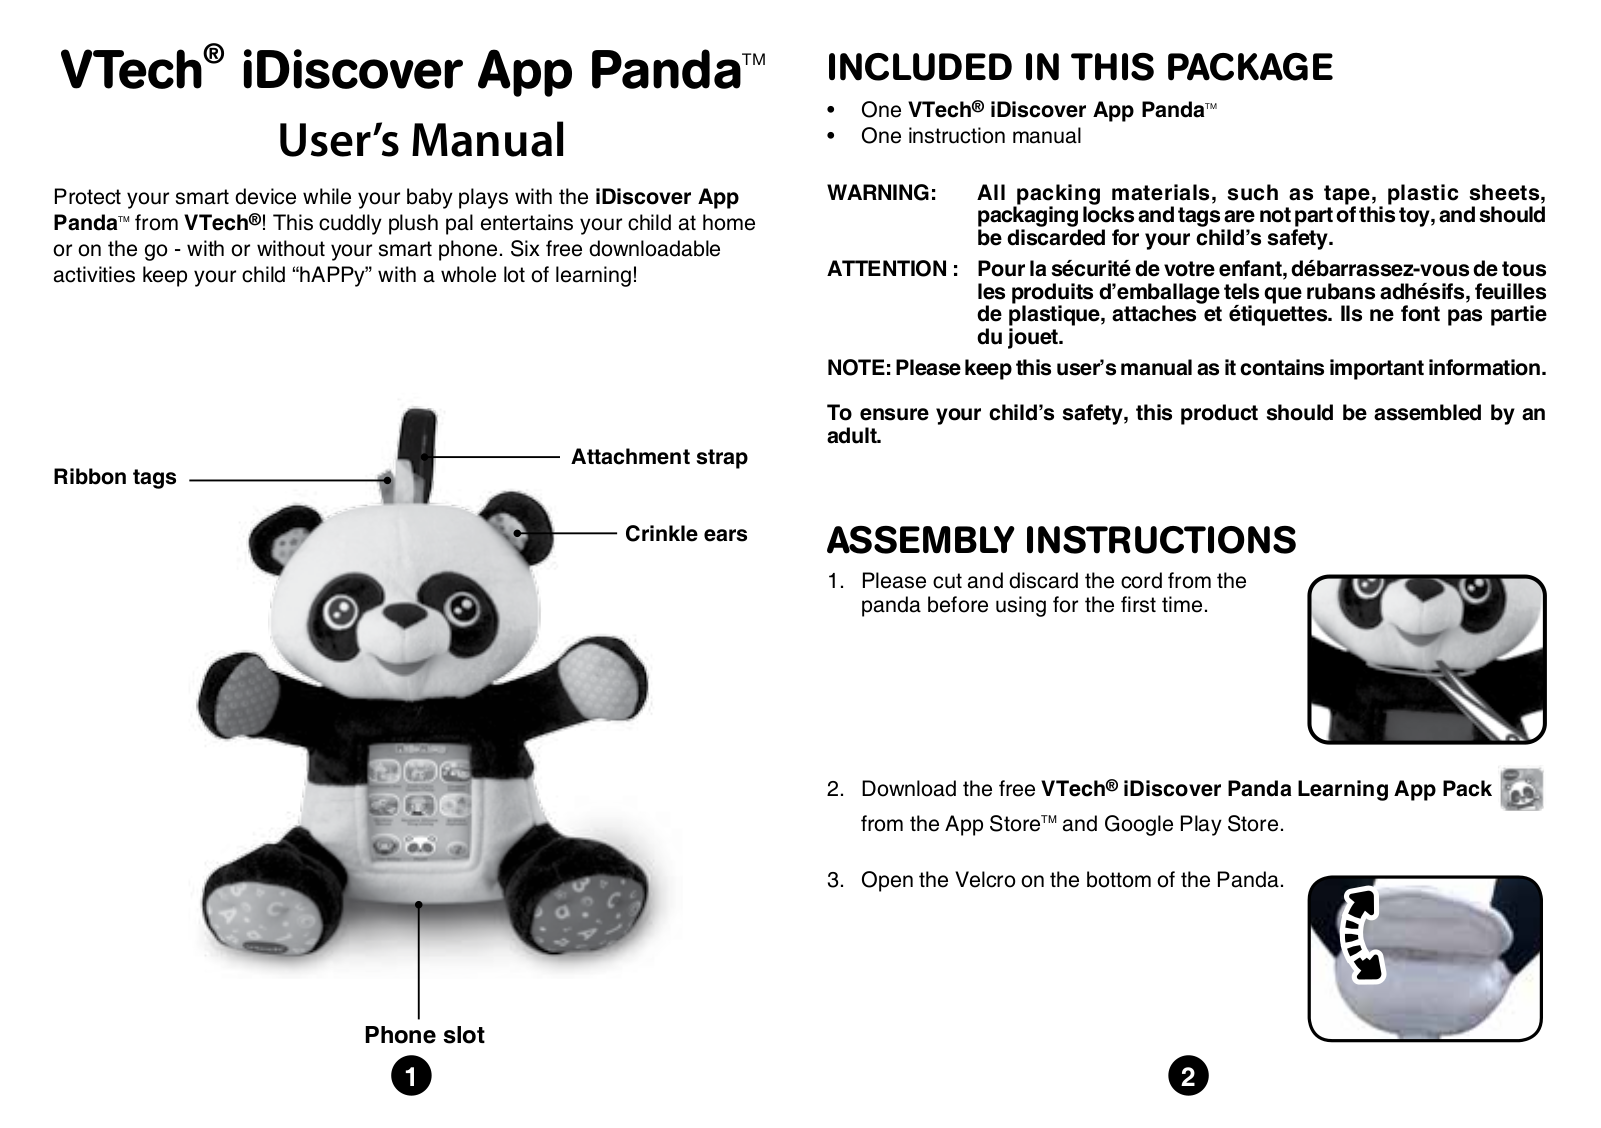 VTech iDiscover App Panda Owner's Manual